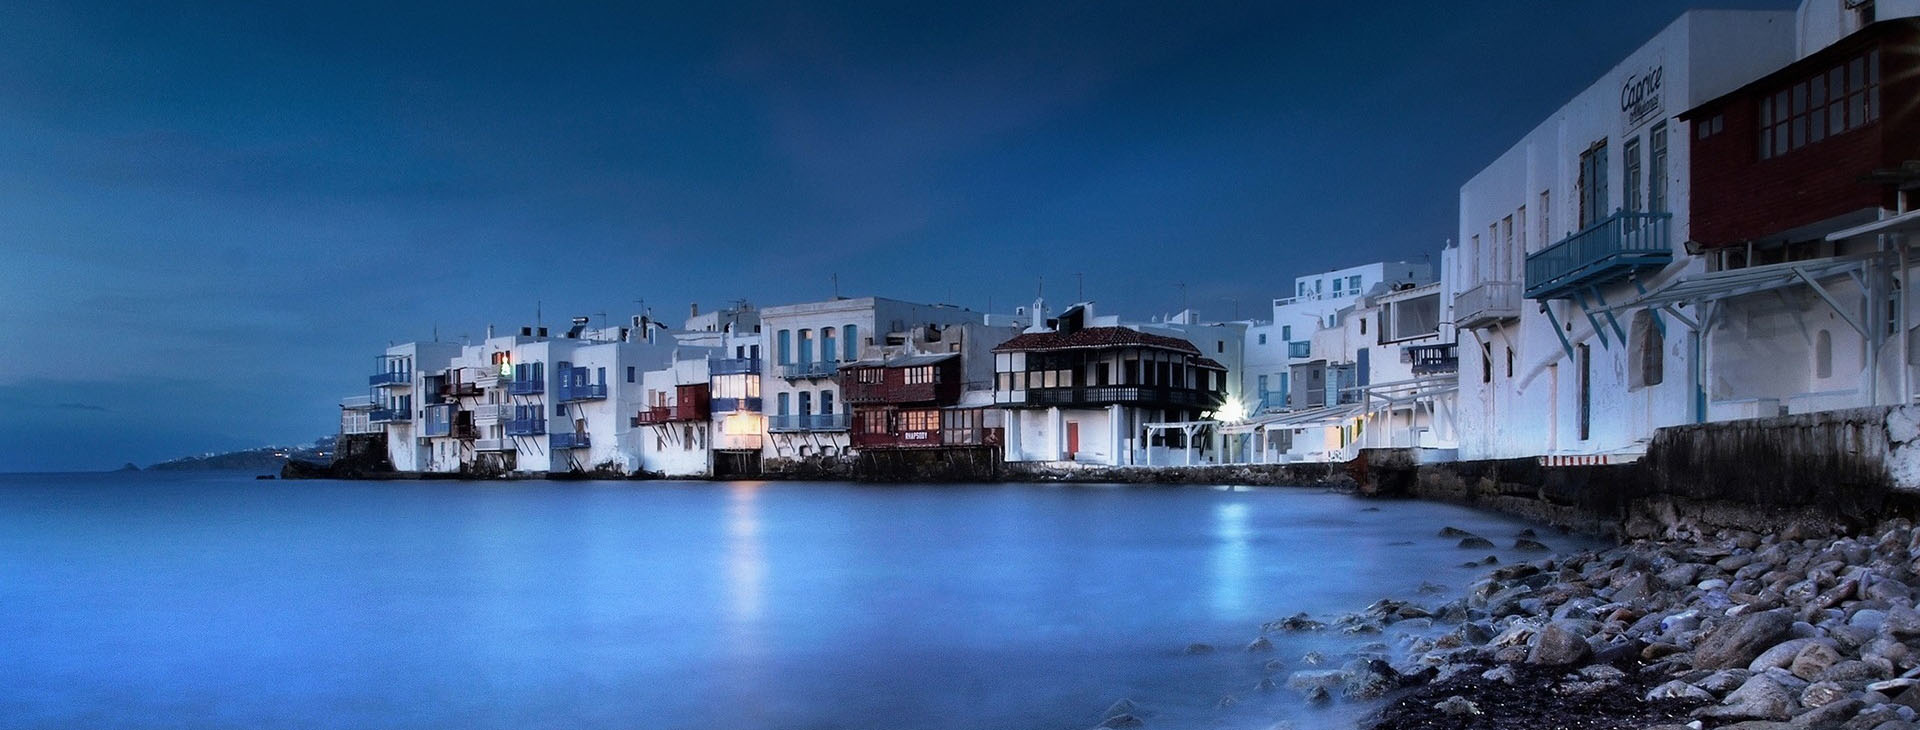 "Little Venice" by night at Mykonos island